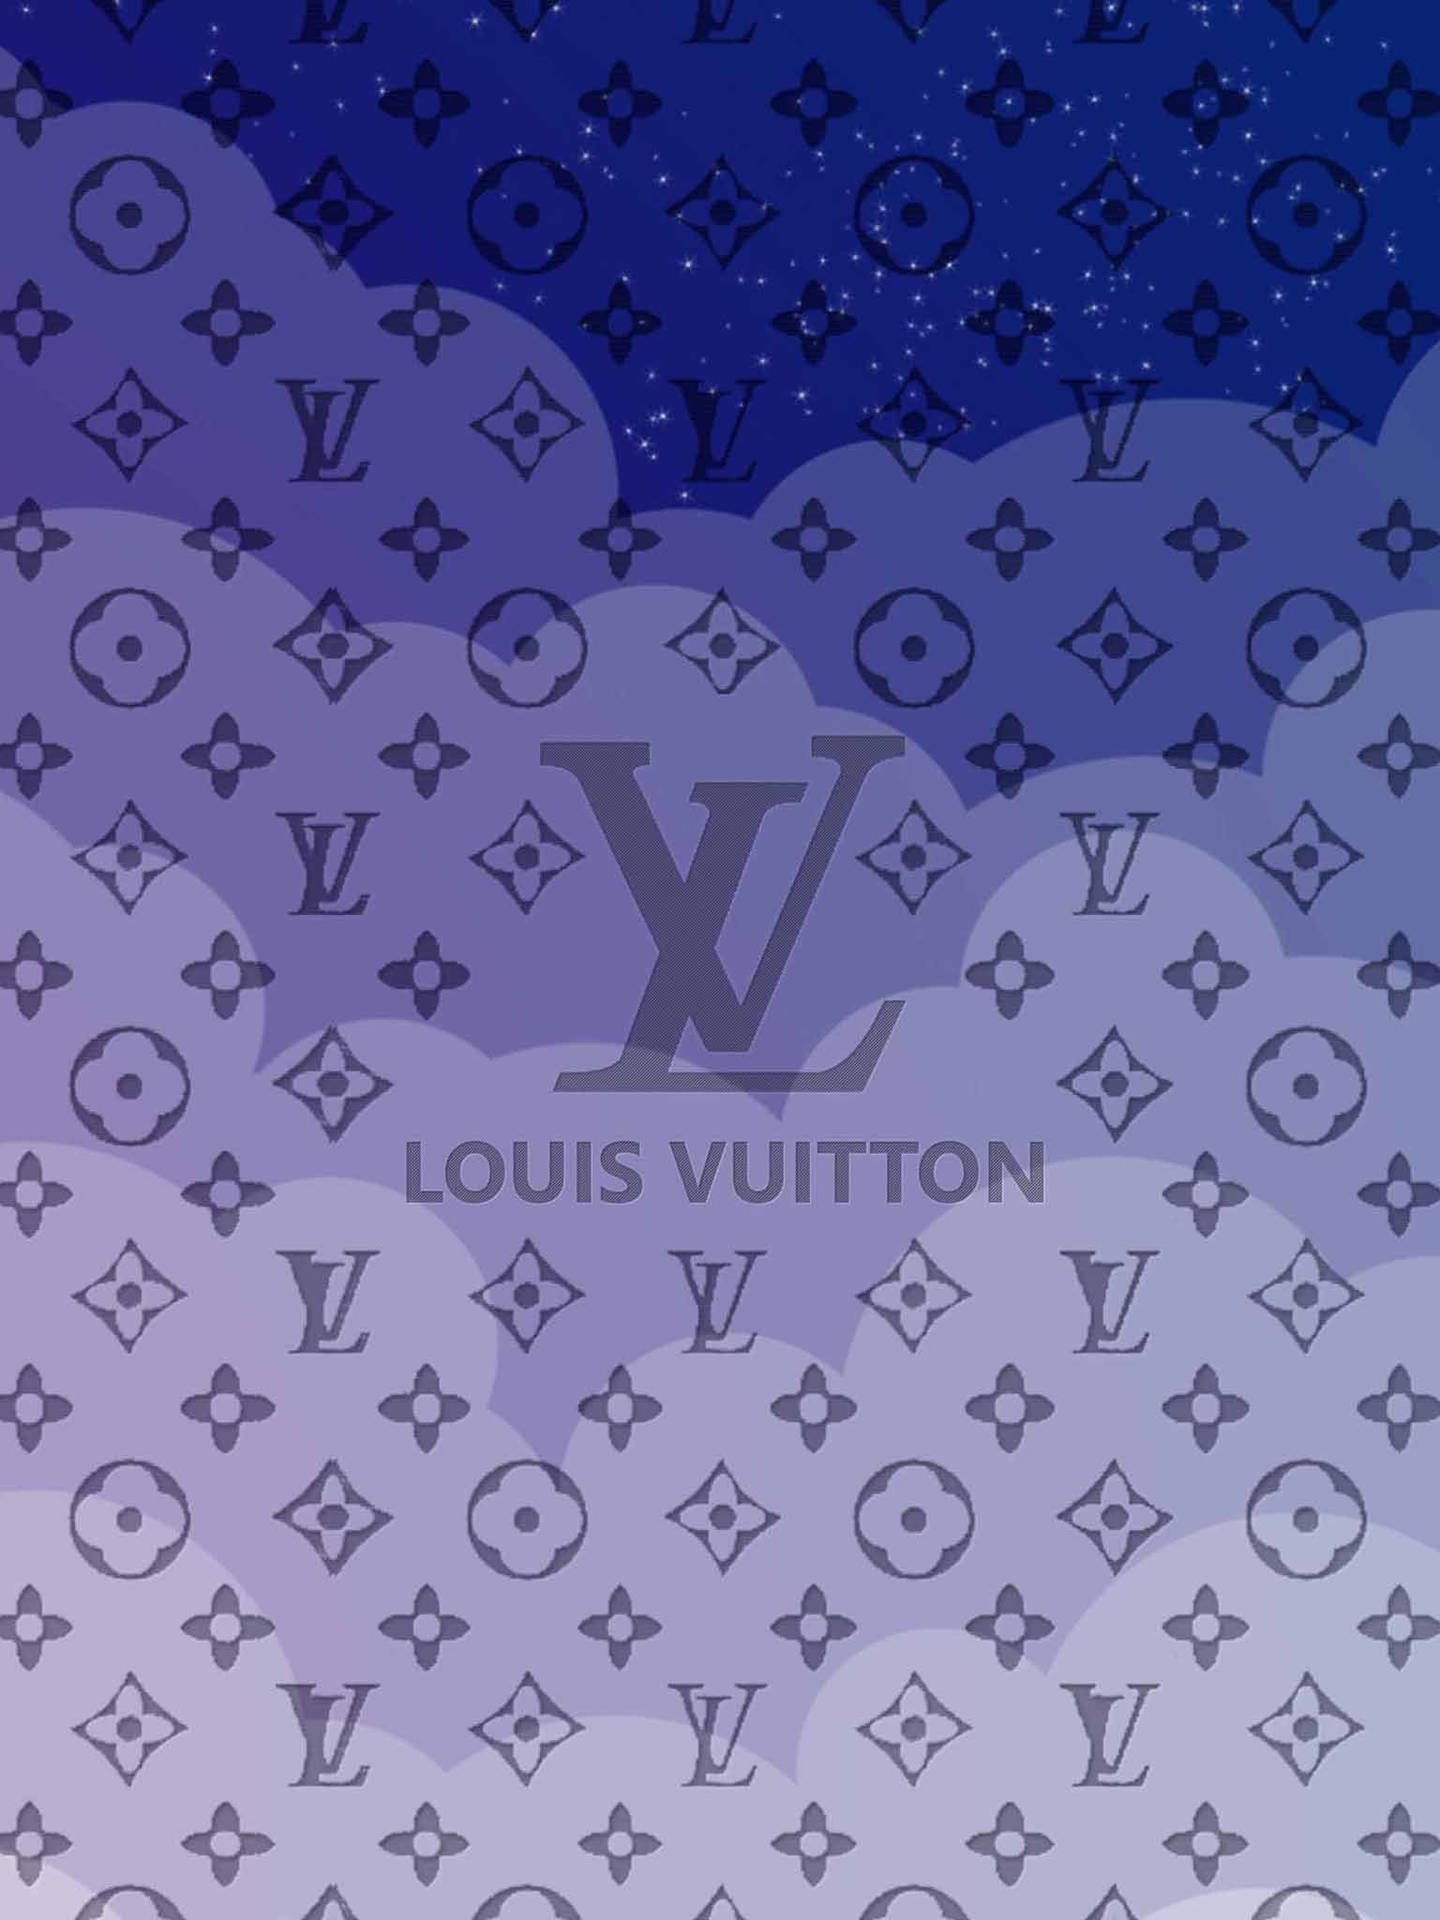 32 Butterfly Louis Vuitton Wallpapers  WallpaperSafari